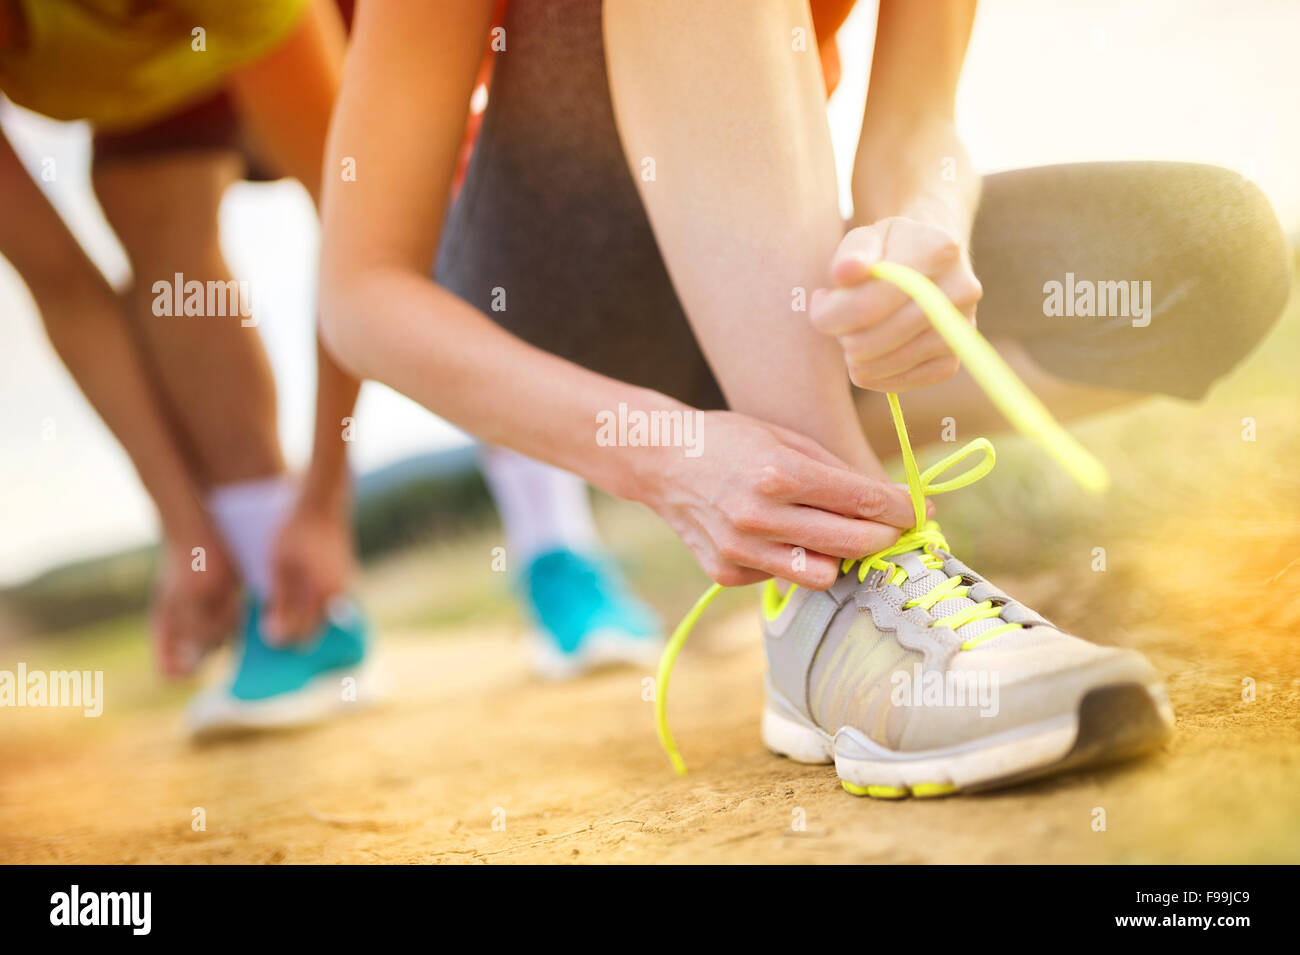 Läufer-Füße. Closeup Paar Laufschuhe laufen. Stockfoto